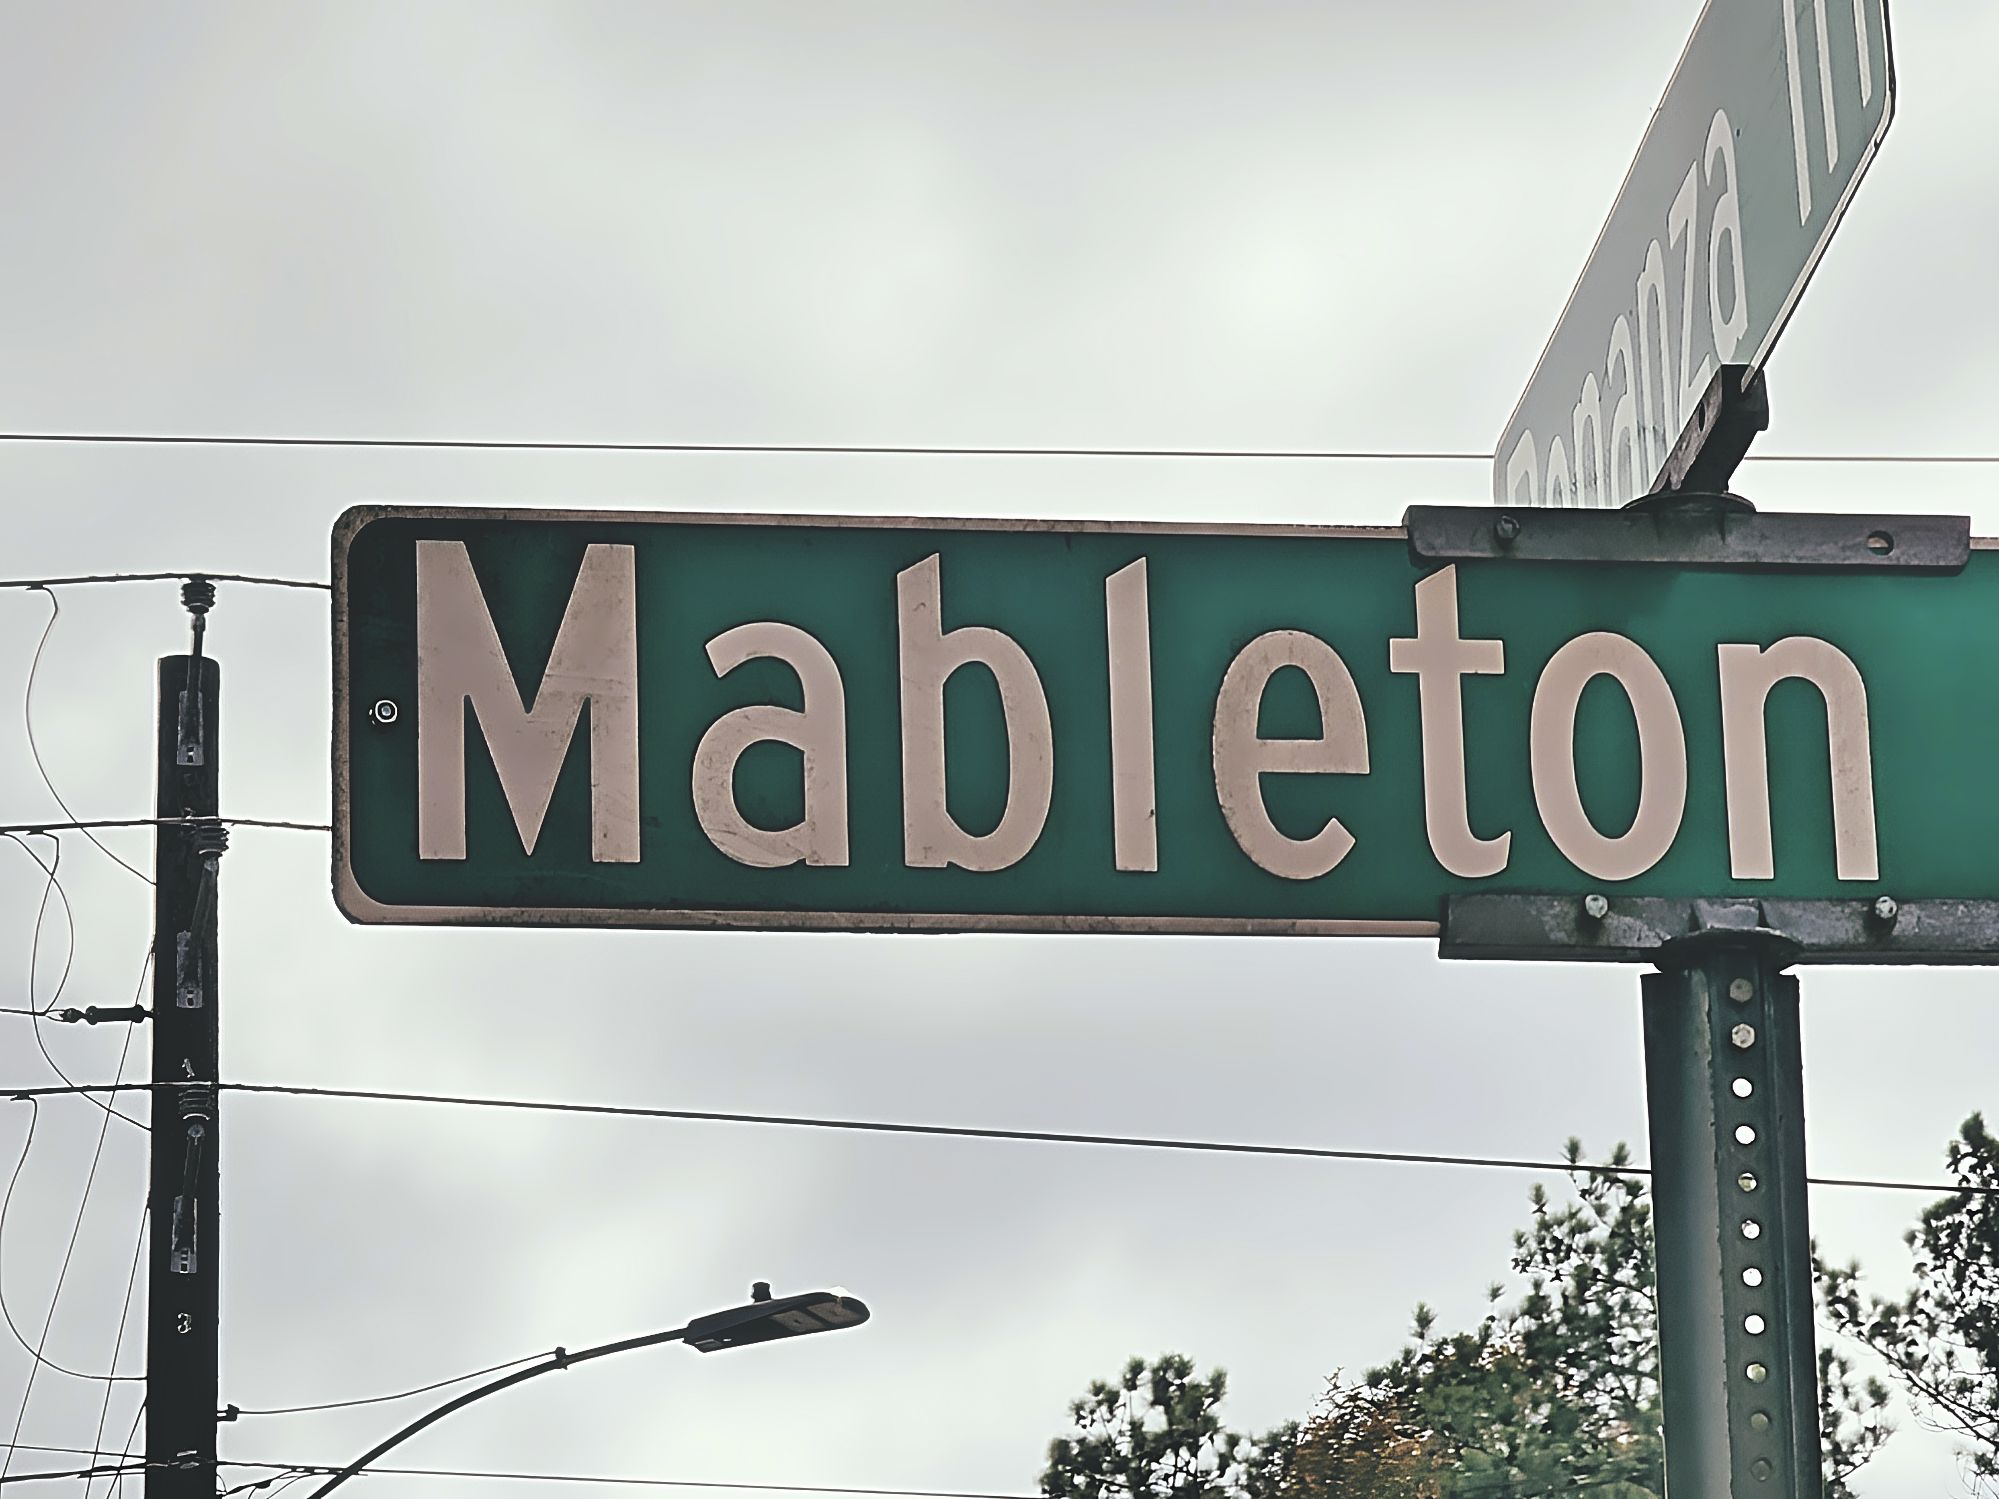 Mableton Street Sign